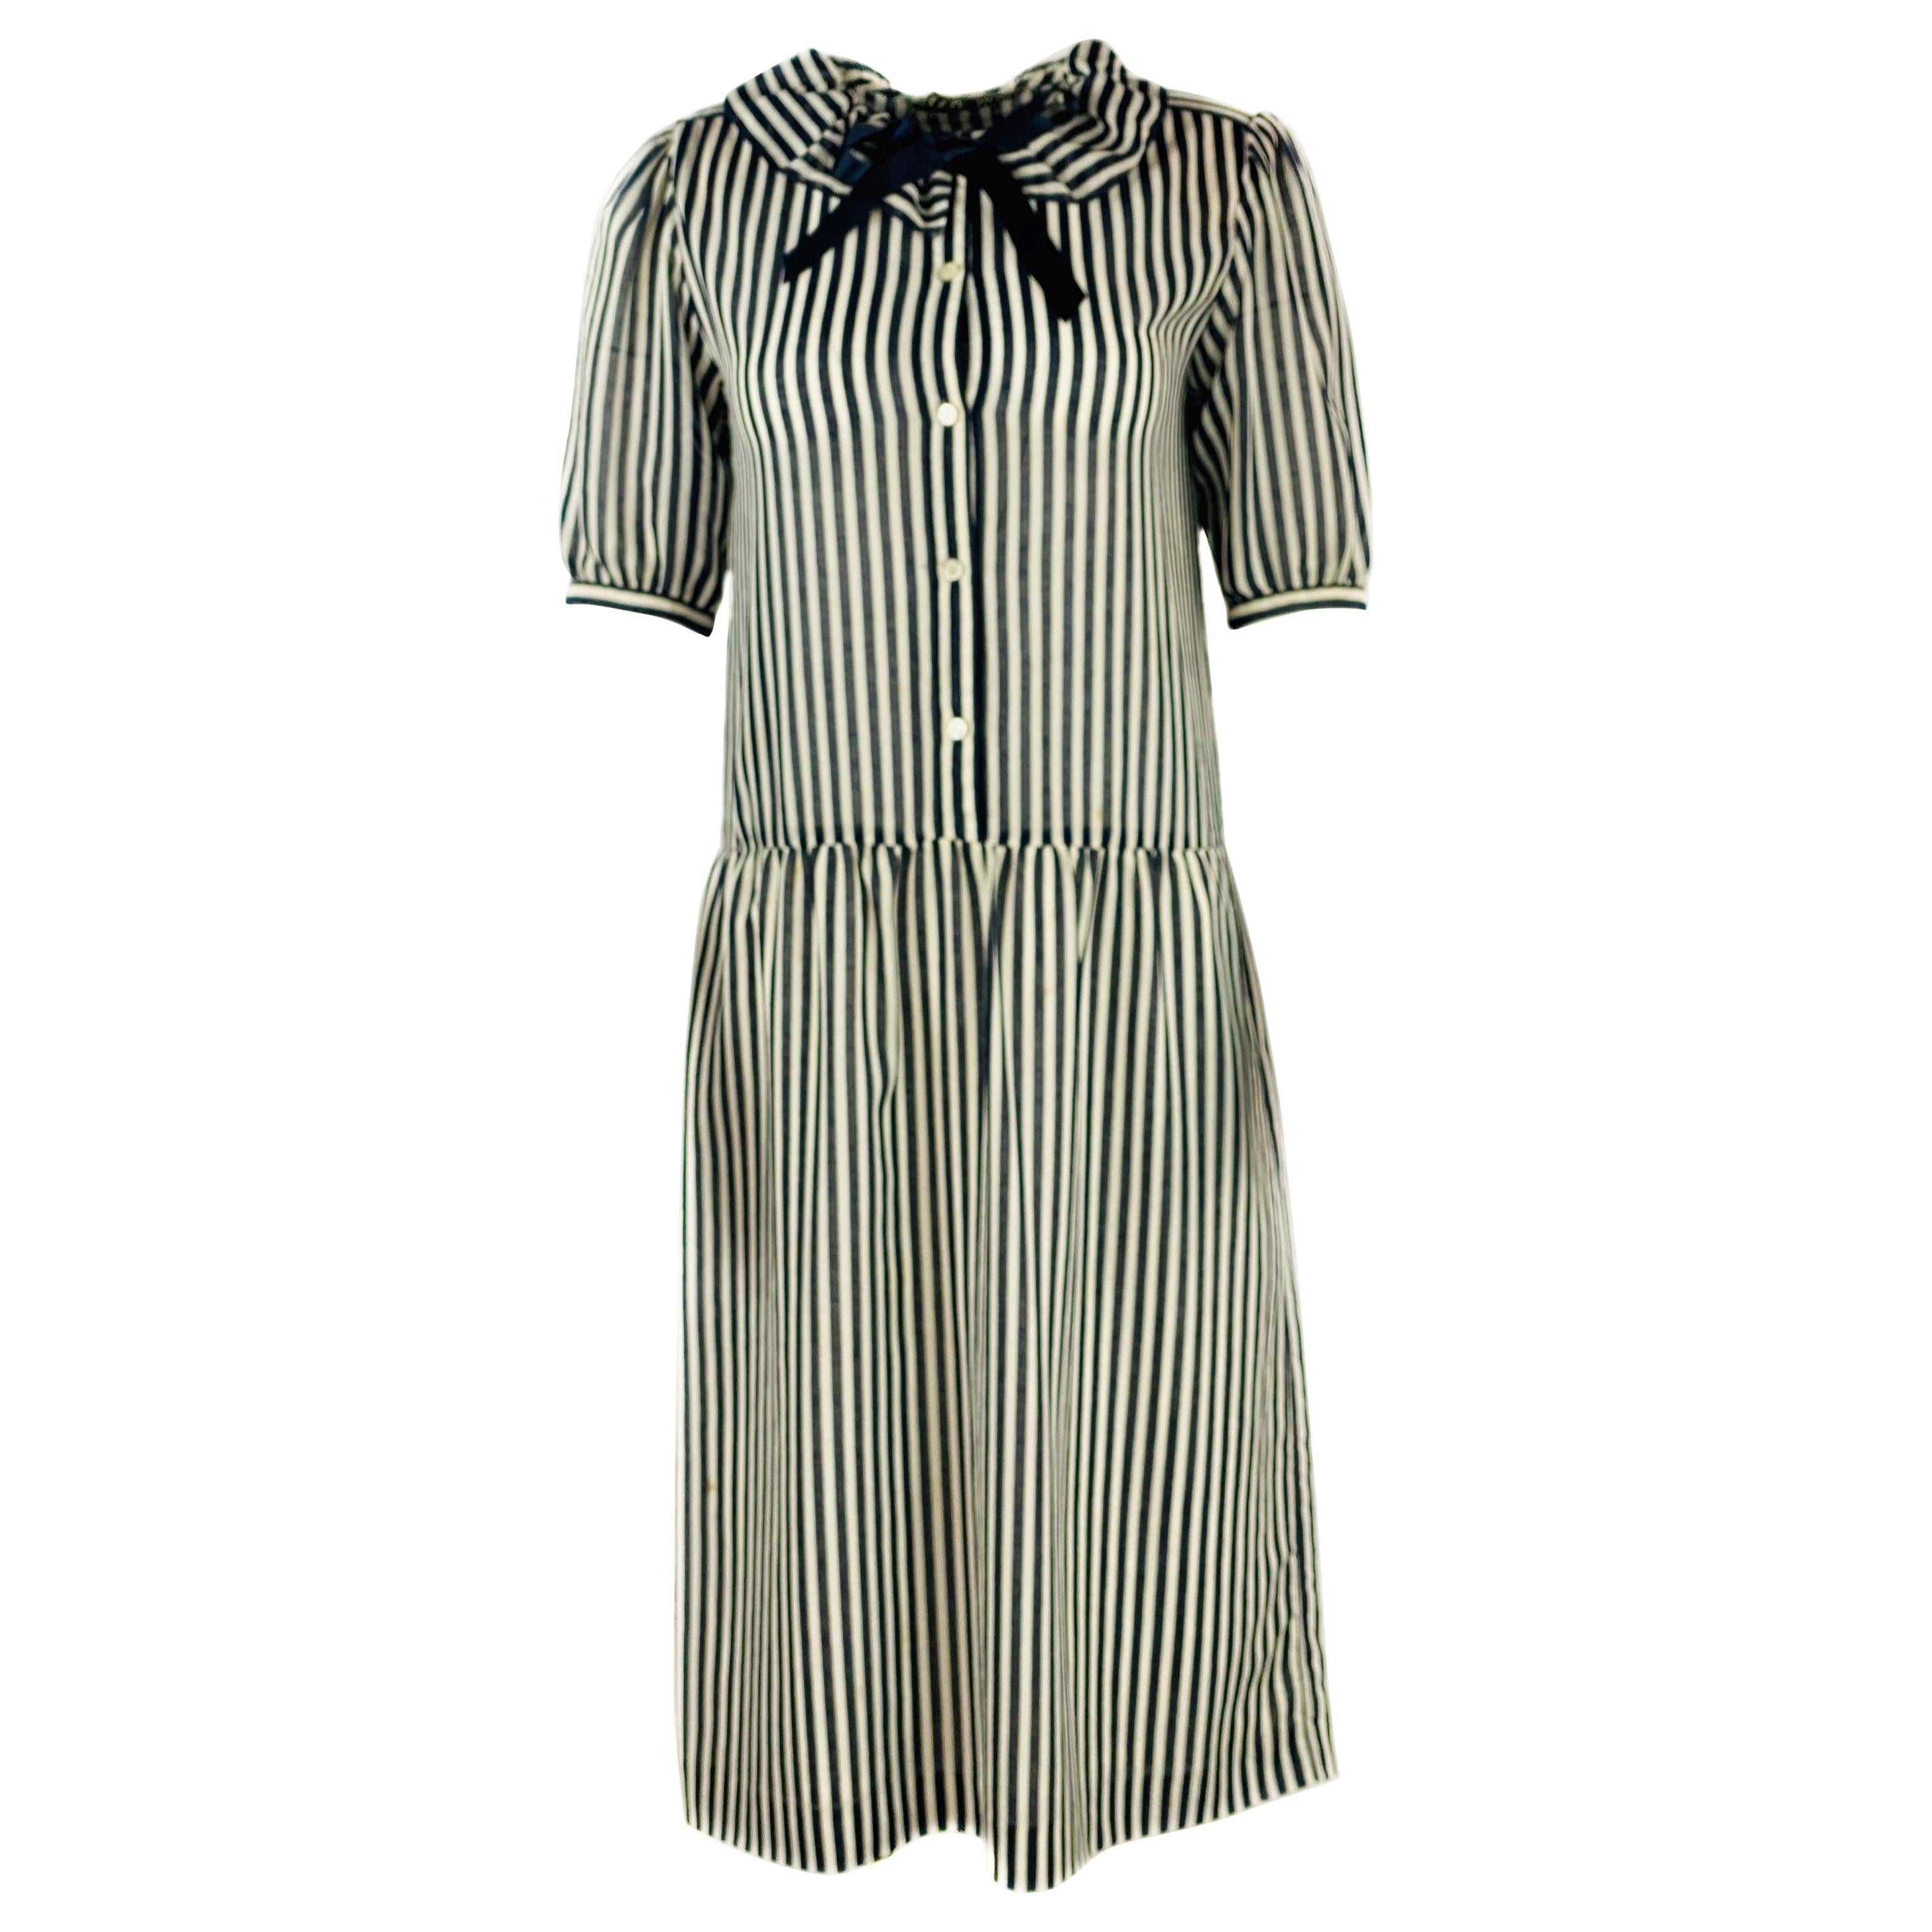 HANAE MORI Navy and White Striped Short Sleeve Midi Dress w/ Bow Size US 8 